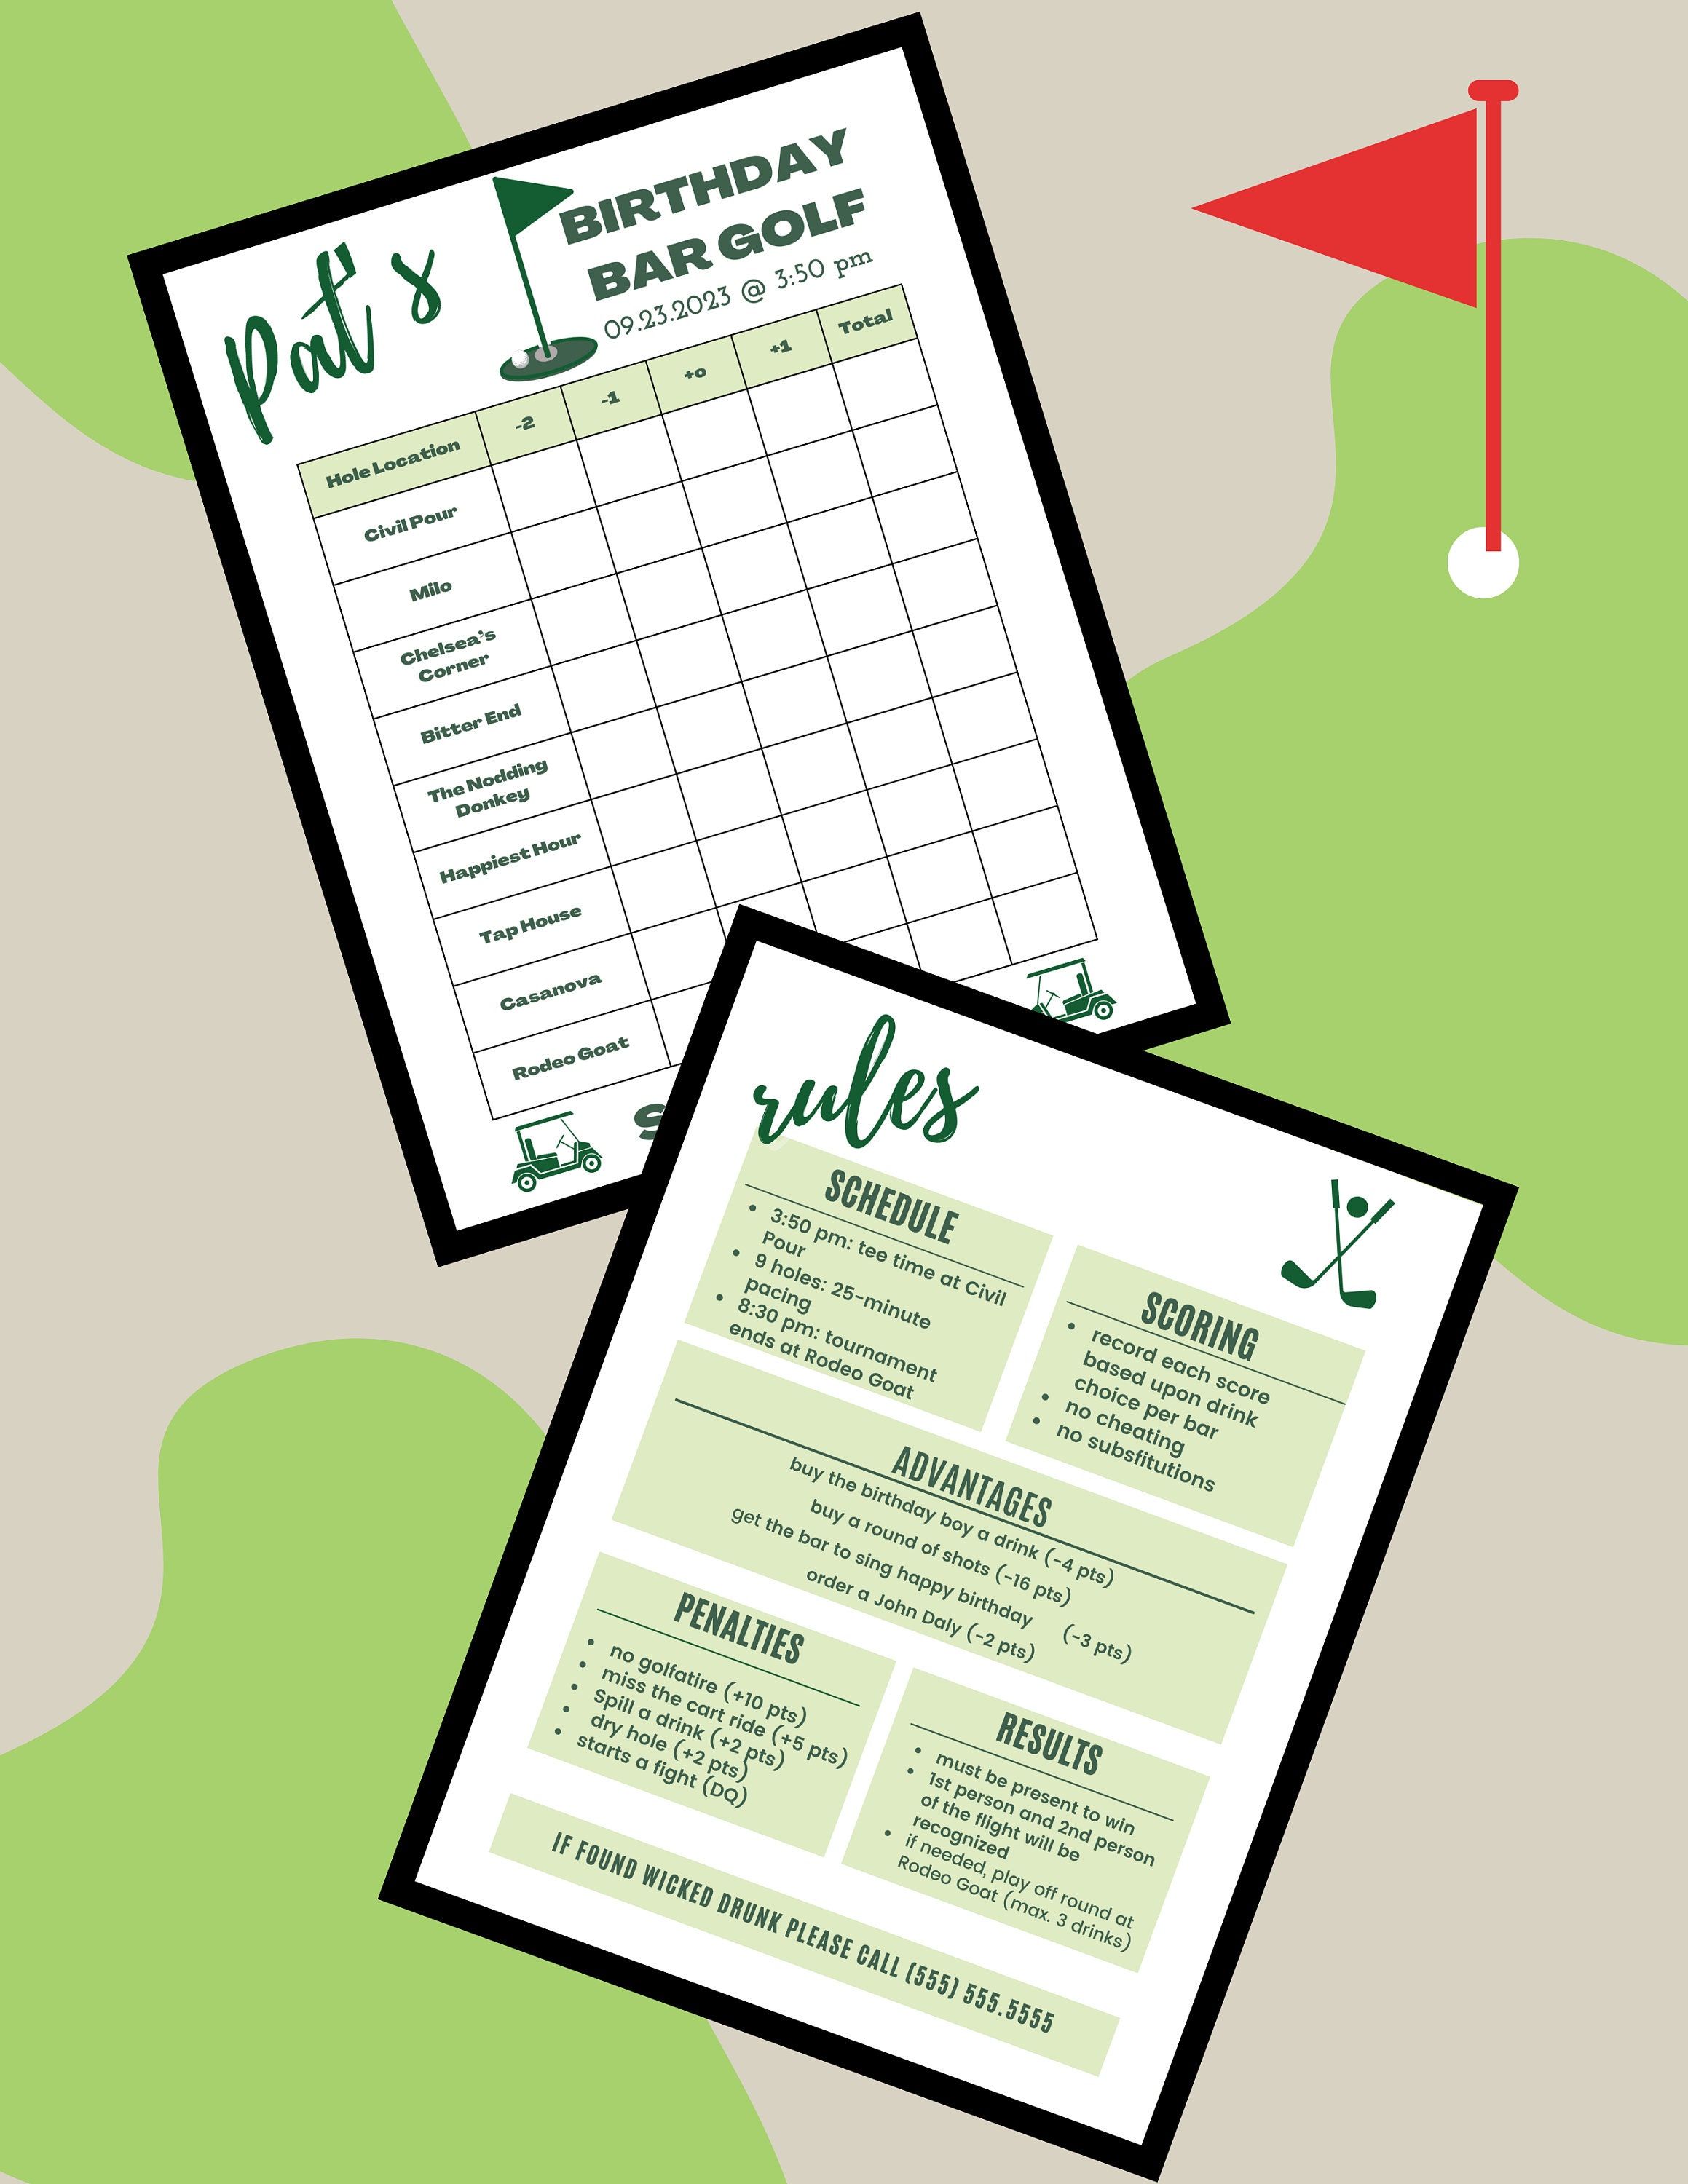 editable-bar-golf-pub-golf-score-card-template-pub-golf-score-hong-kong